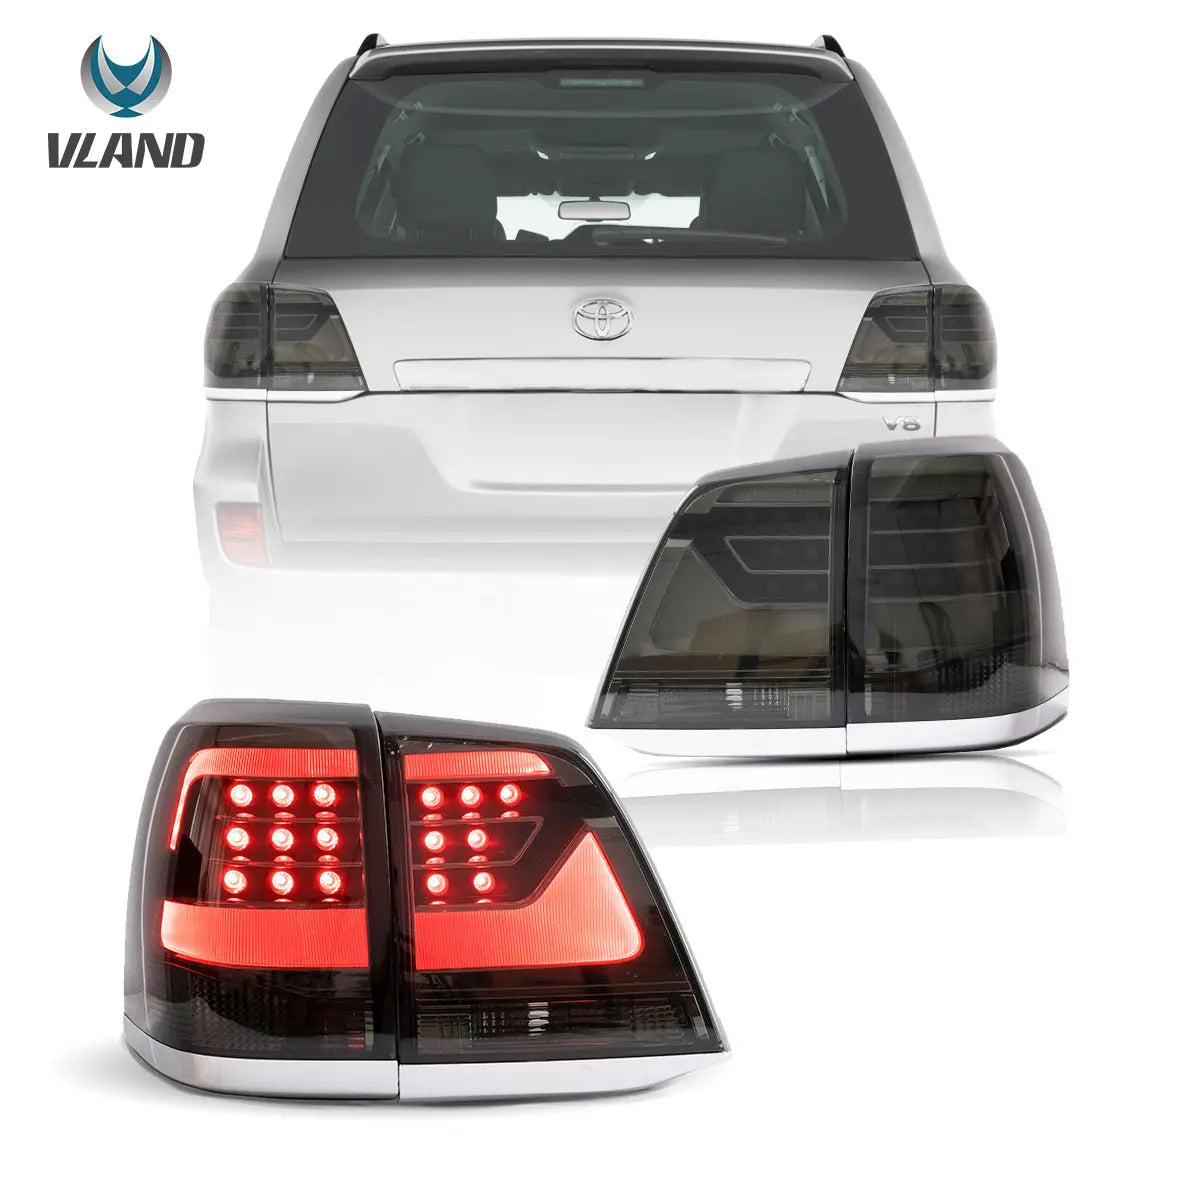 08-11 Toyota Land Cruiser 200 Series Vland LED Tail Light with Amber Turn Signal